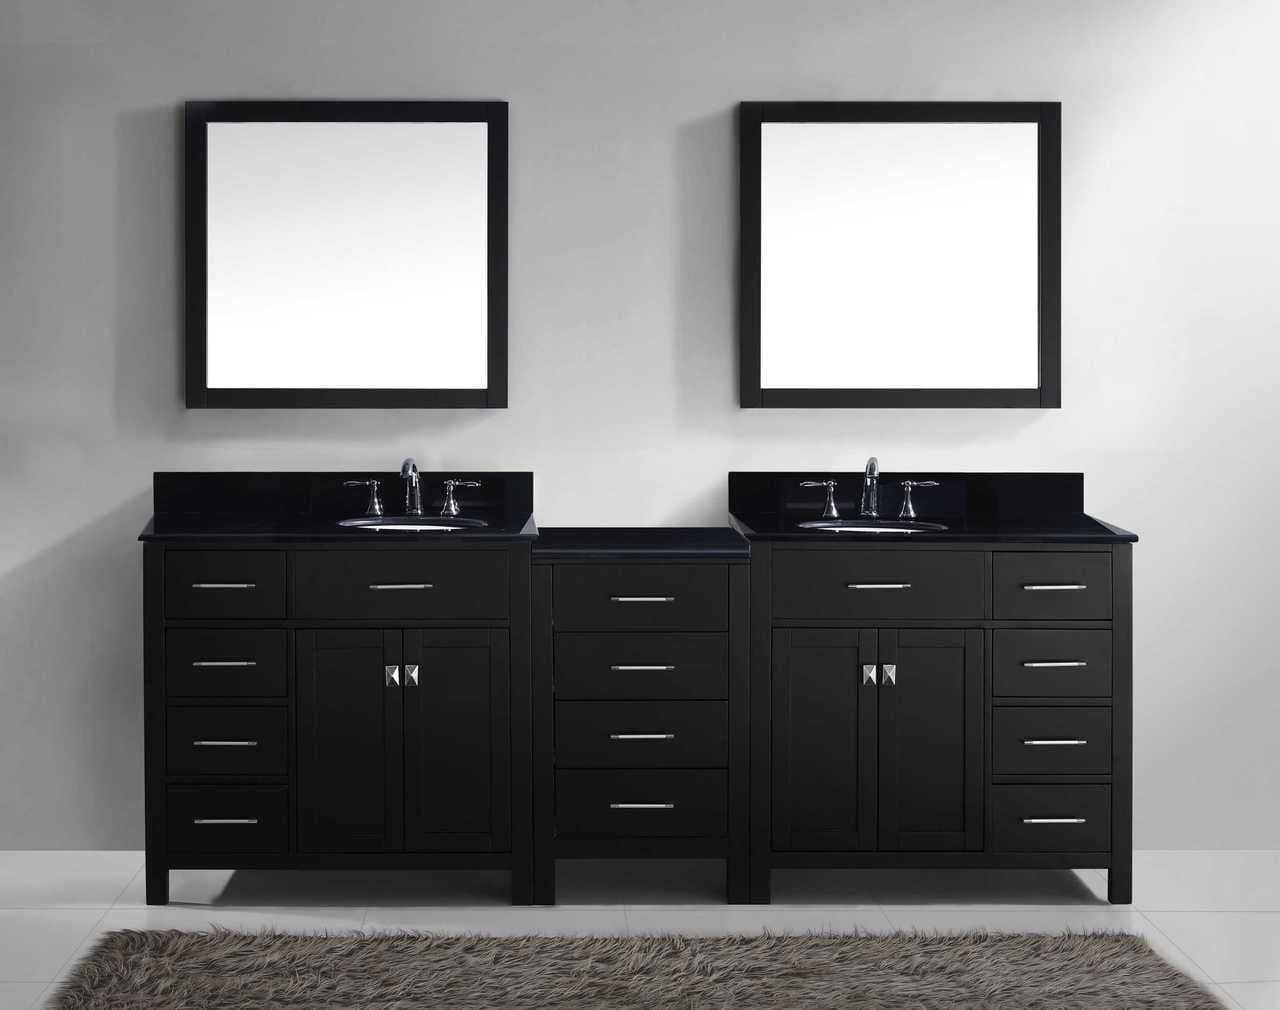 Virtu USA Caroline Parkway 93" Double Bathroom Vanity Set in Espresso w/ Black Galaxy Granite Counter-Top | Round Basin